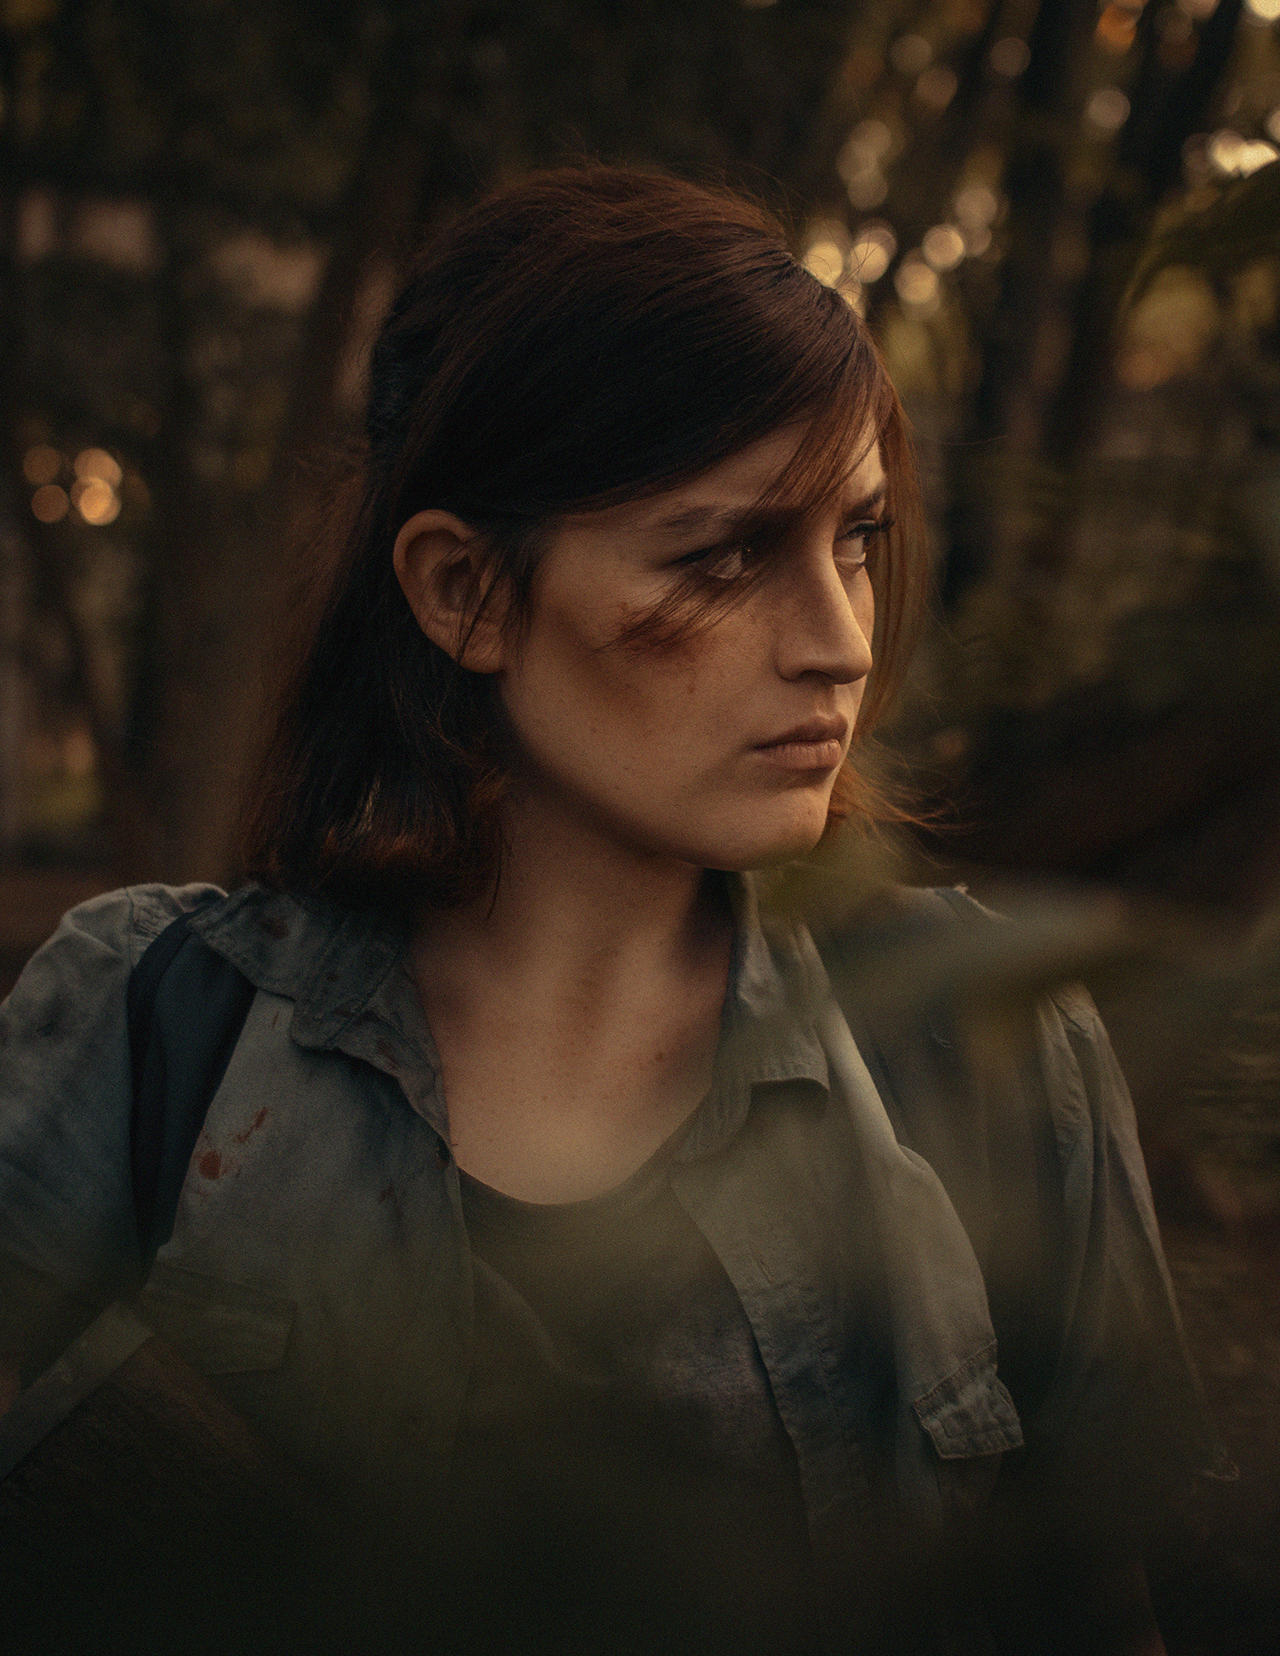 Ellie Cosplay The Last of Us Part 2 by meyvk on DeviantArt